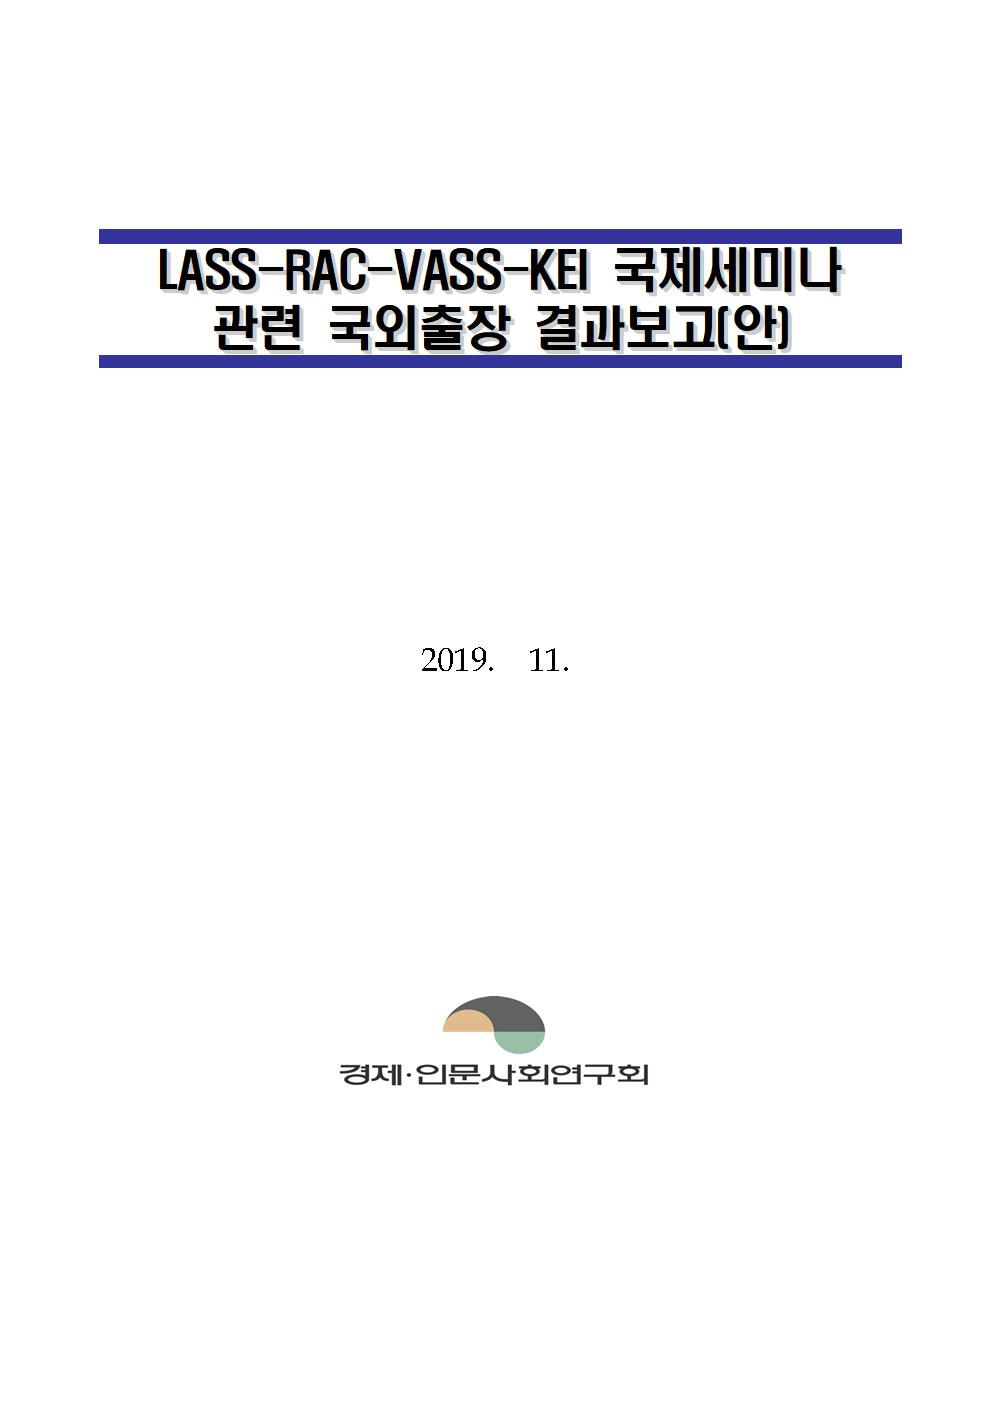 LASS-RAC-VASS-KEI 국제세미나 국외출장 결과 보고